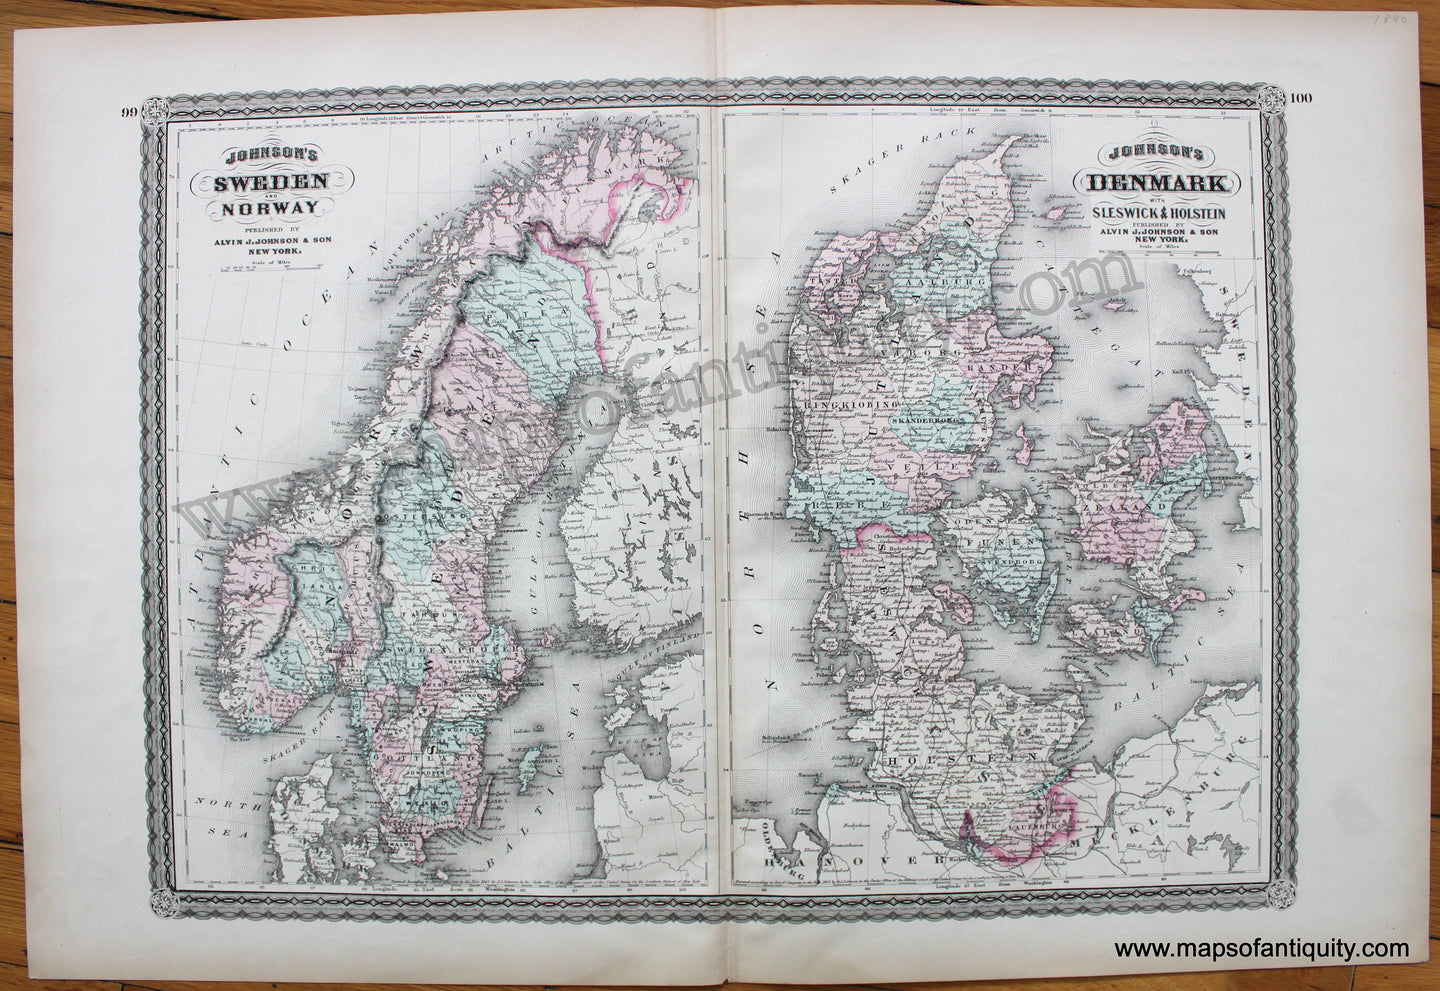 Antique-Hand-Colored-Map-Johnson's-Sweden-and-Norway;-Johnson's-Denmark-with-Sleswick-&-Holstein-1880-Alvin-J.-Johnson-&-Son-Scandinavia-Denmark-&-Iceland-1800s-19th-century-Maps-of-Antiquity